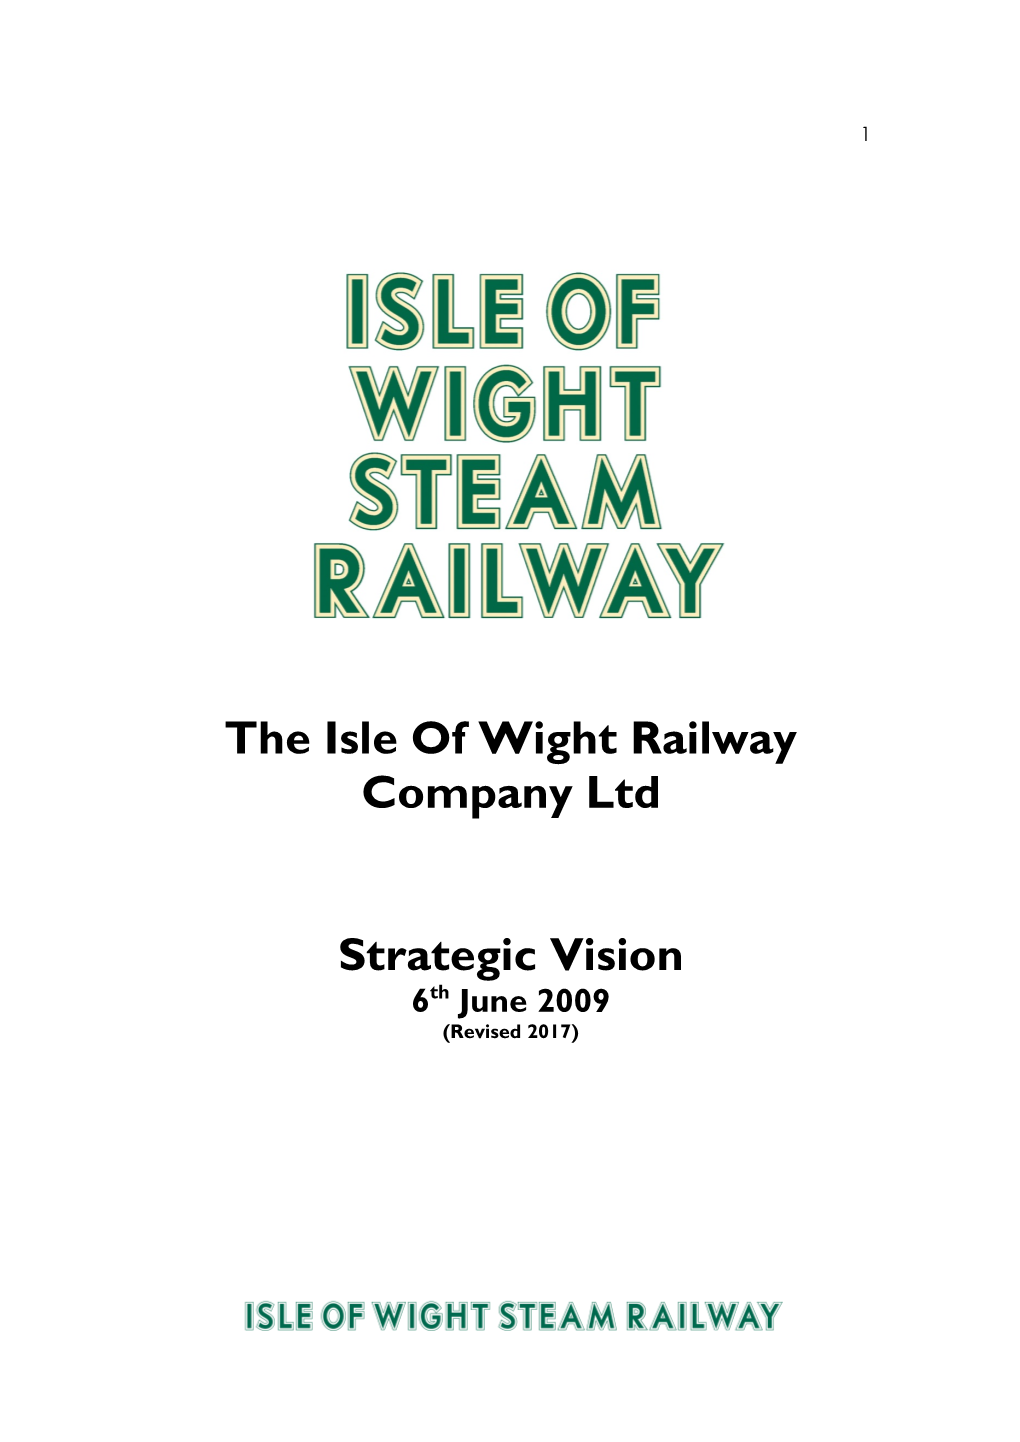 The Isle of Wight Railway Company Ltd Strategic Vision